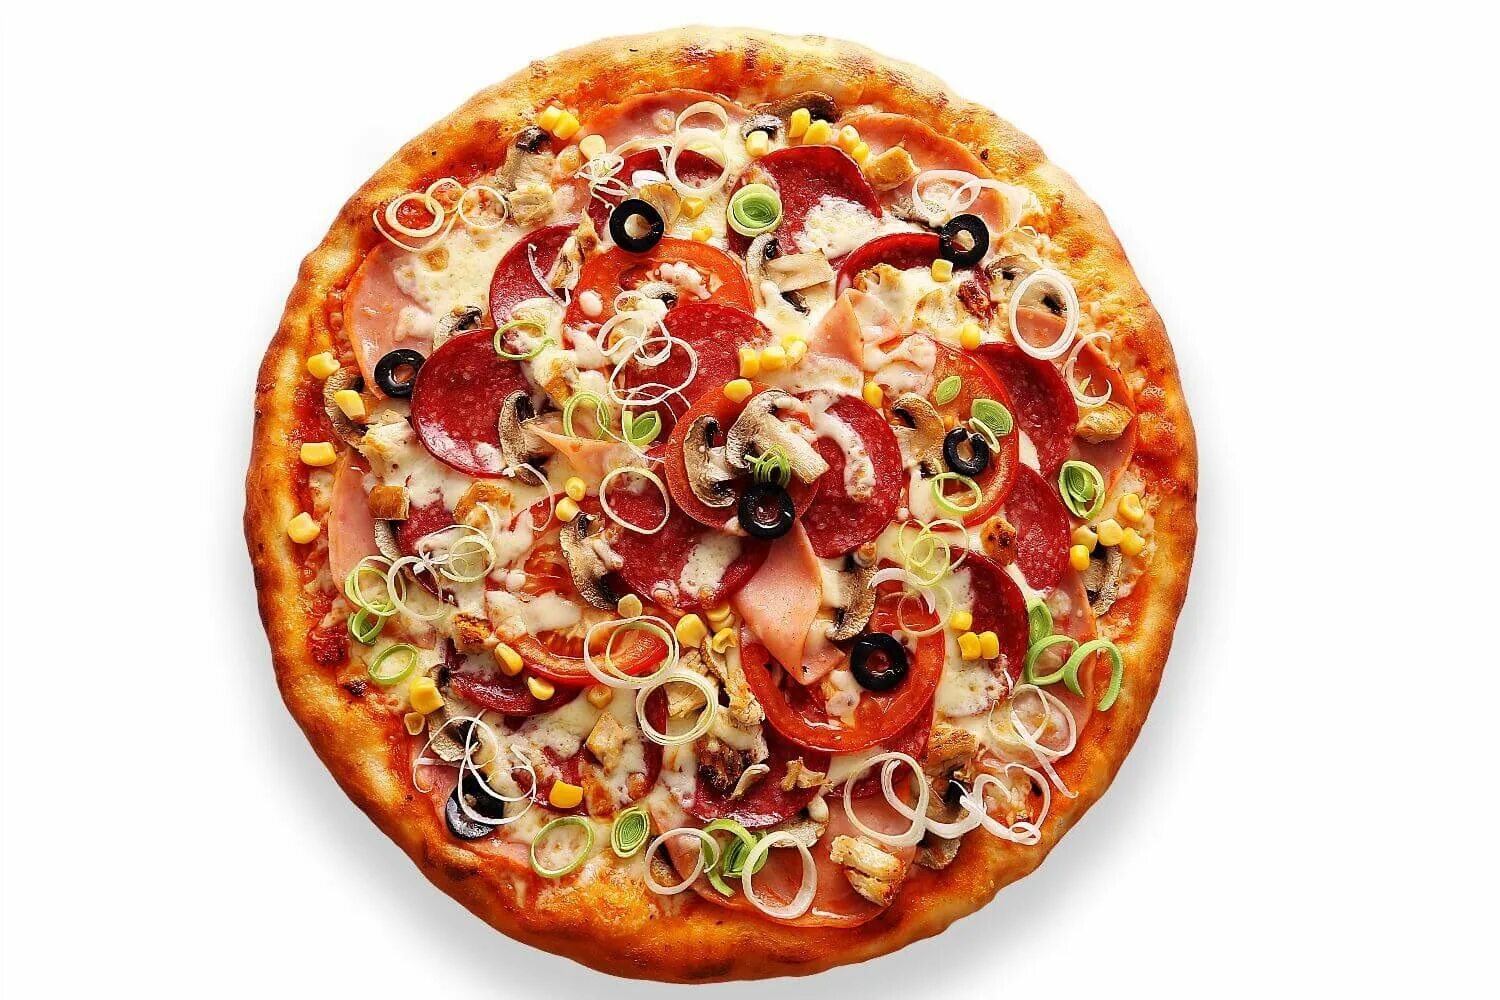 "Пицца". Пицца сверху. Пицца на белом фоне. Сочная пицца.